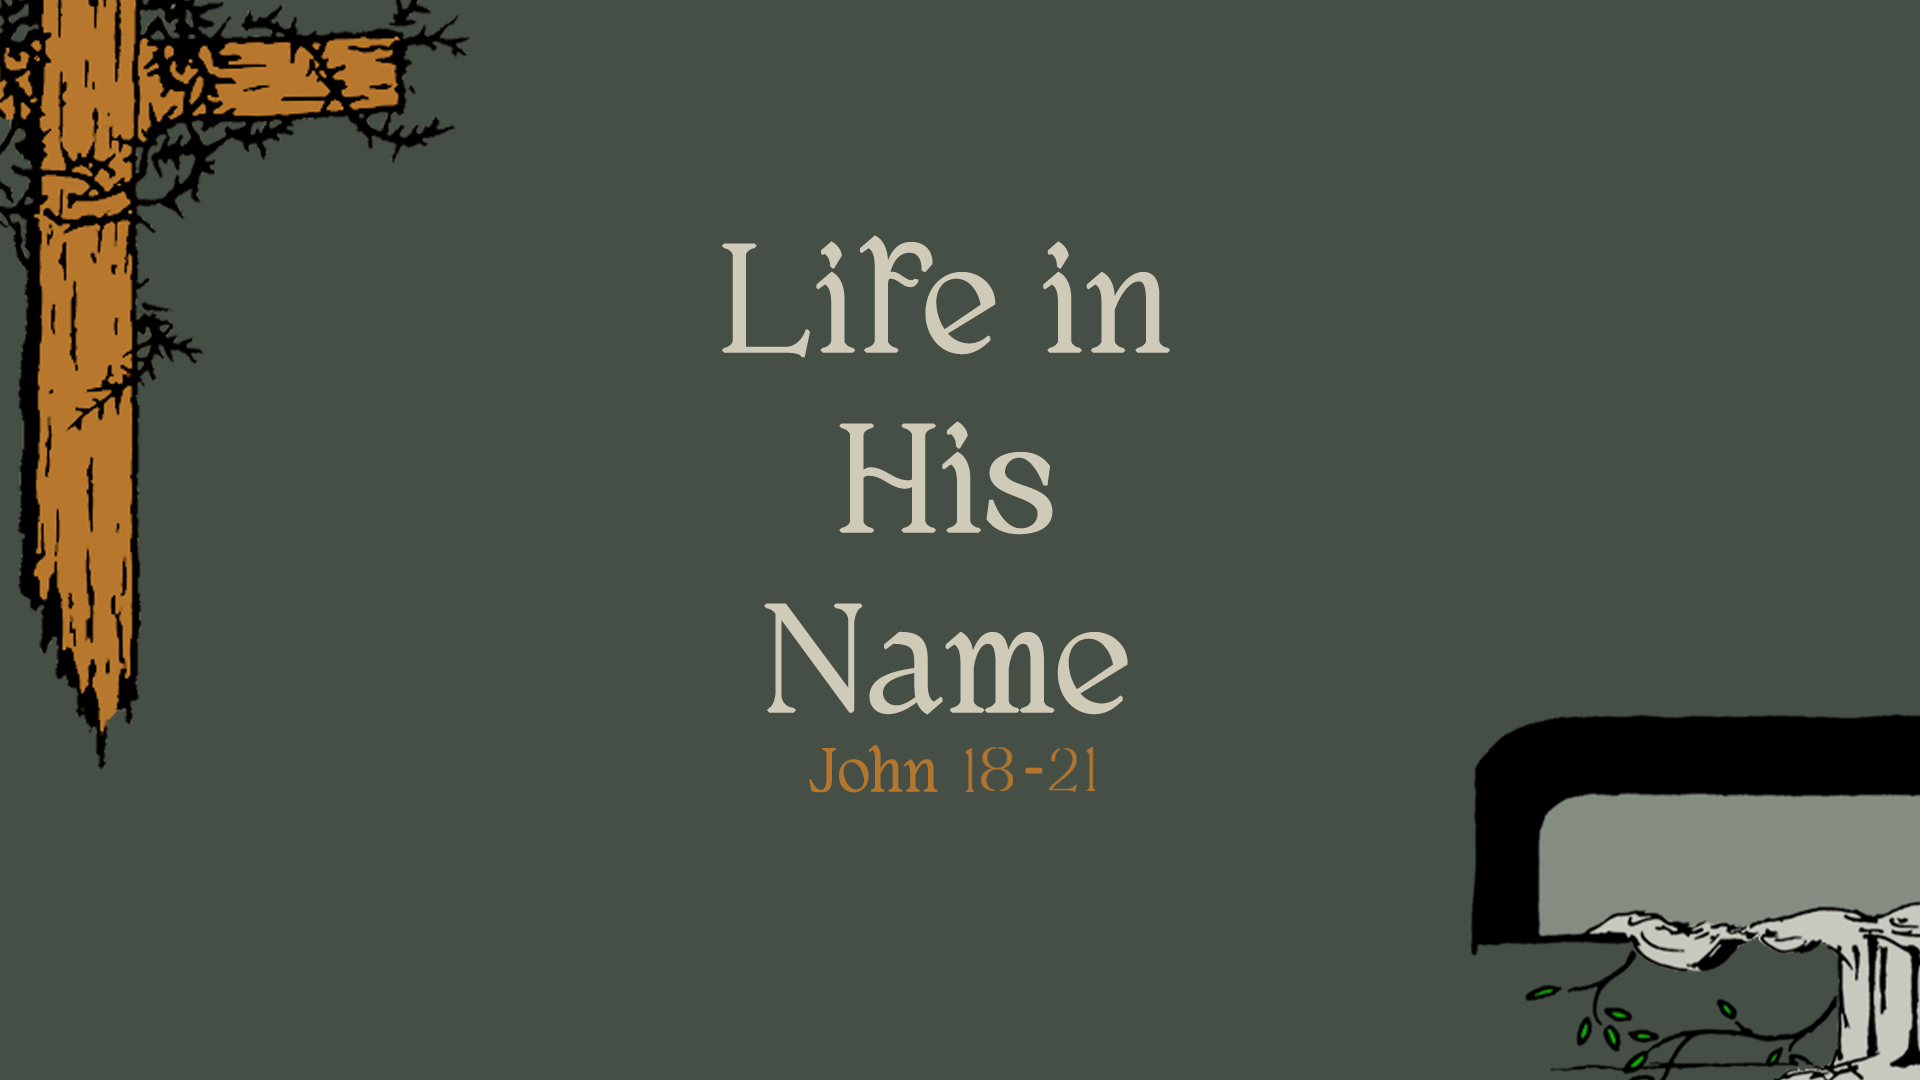 John 18-21: Life in His Name